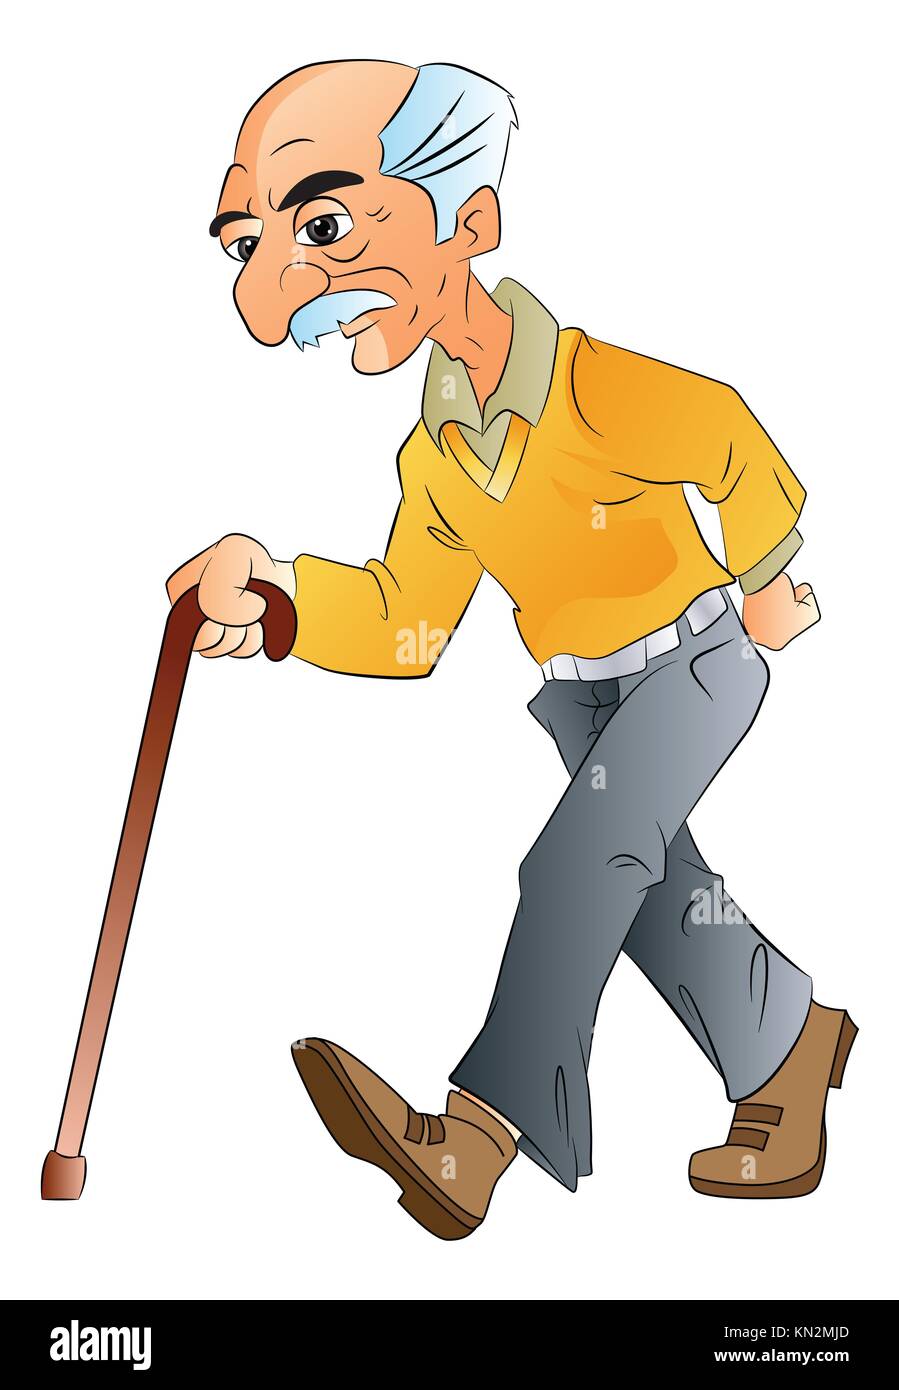 Drawn stick figure senior old man elderly Vector Image